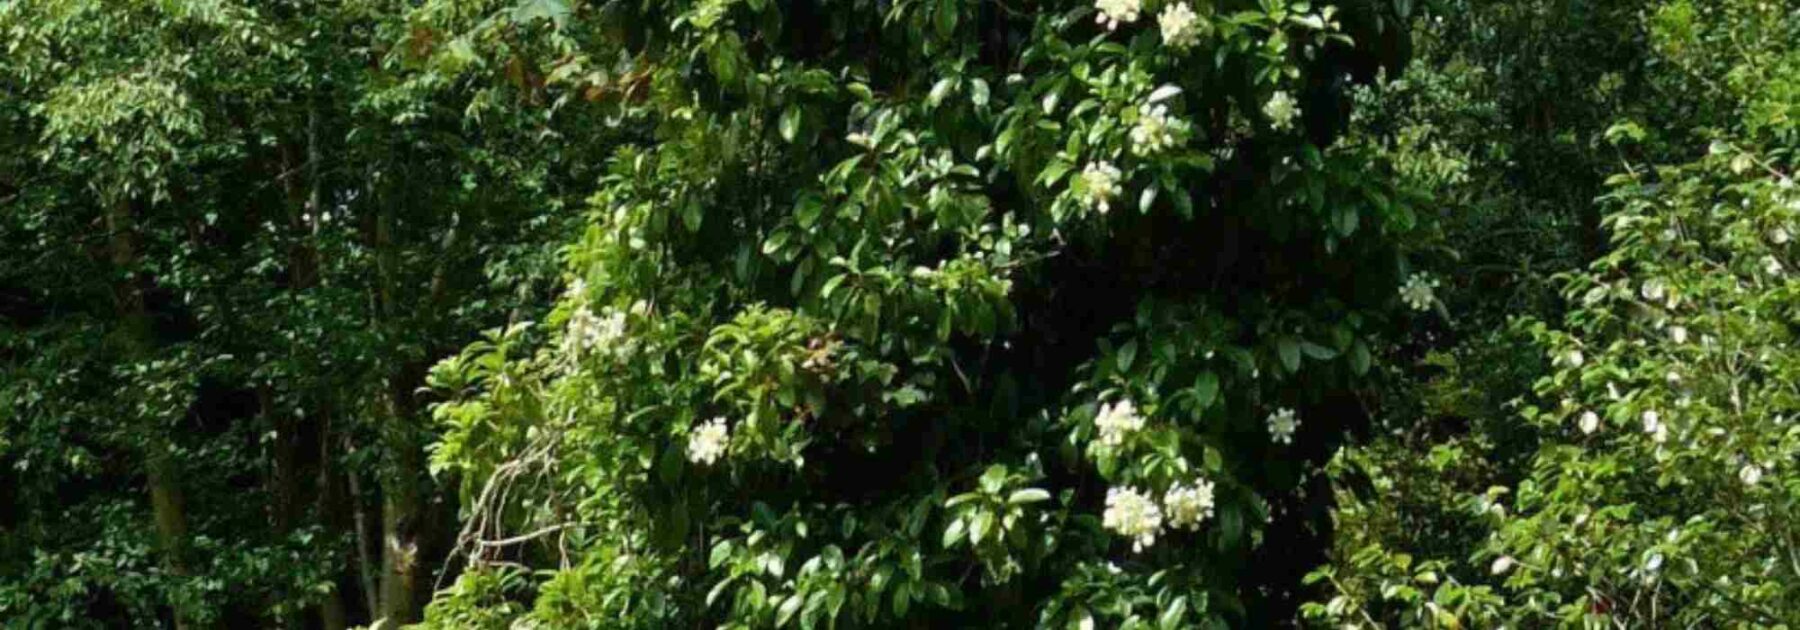 Les hortensias persistants et semi-persistants